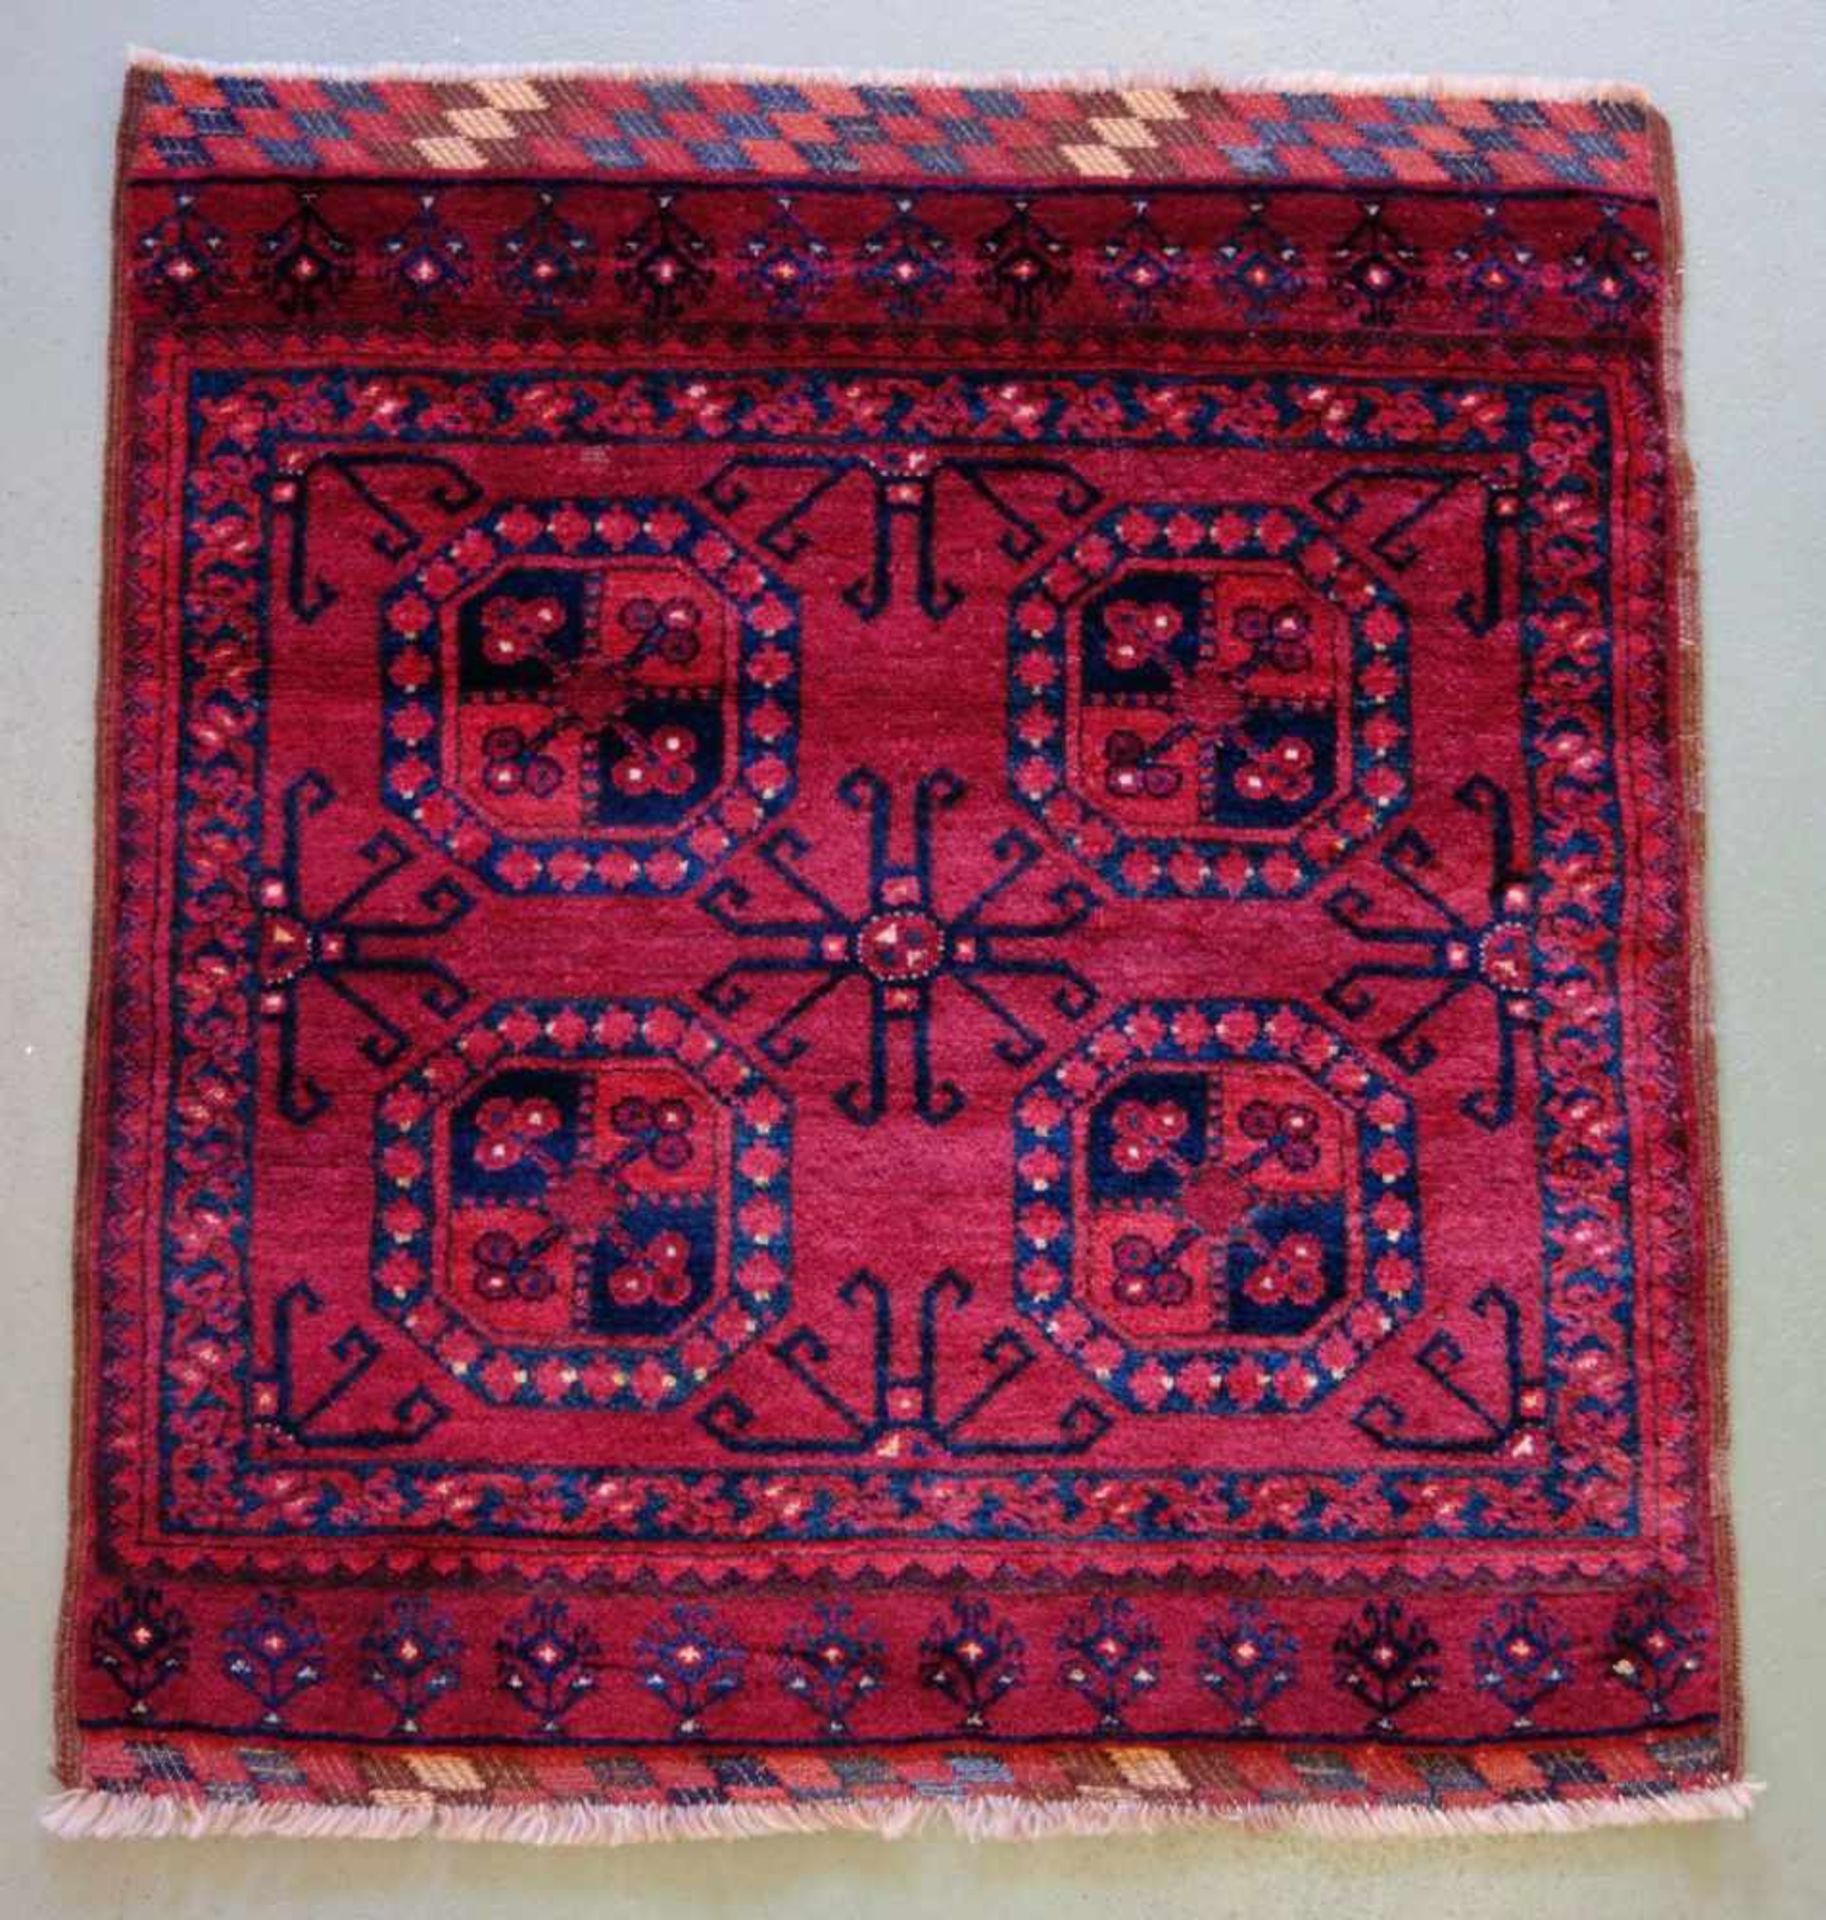 KLEINER TEPPICH / ERSARI / carpet, wohl Turkmenien / Turkestan, wohl Ende 19. Jh. / Anfang 20.